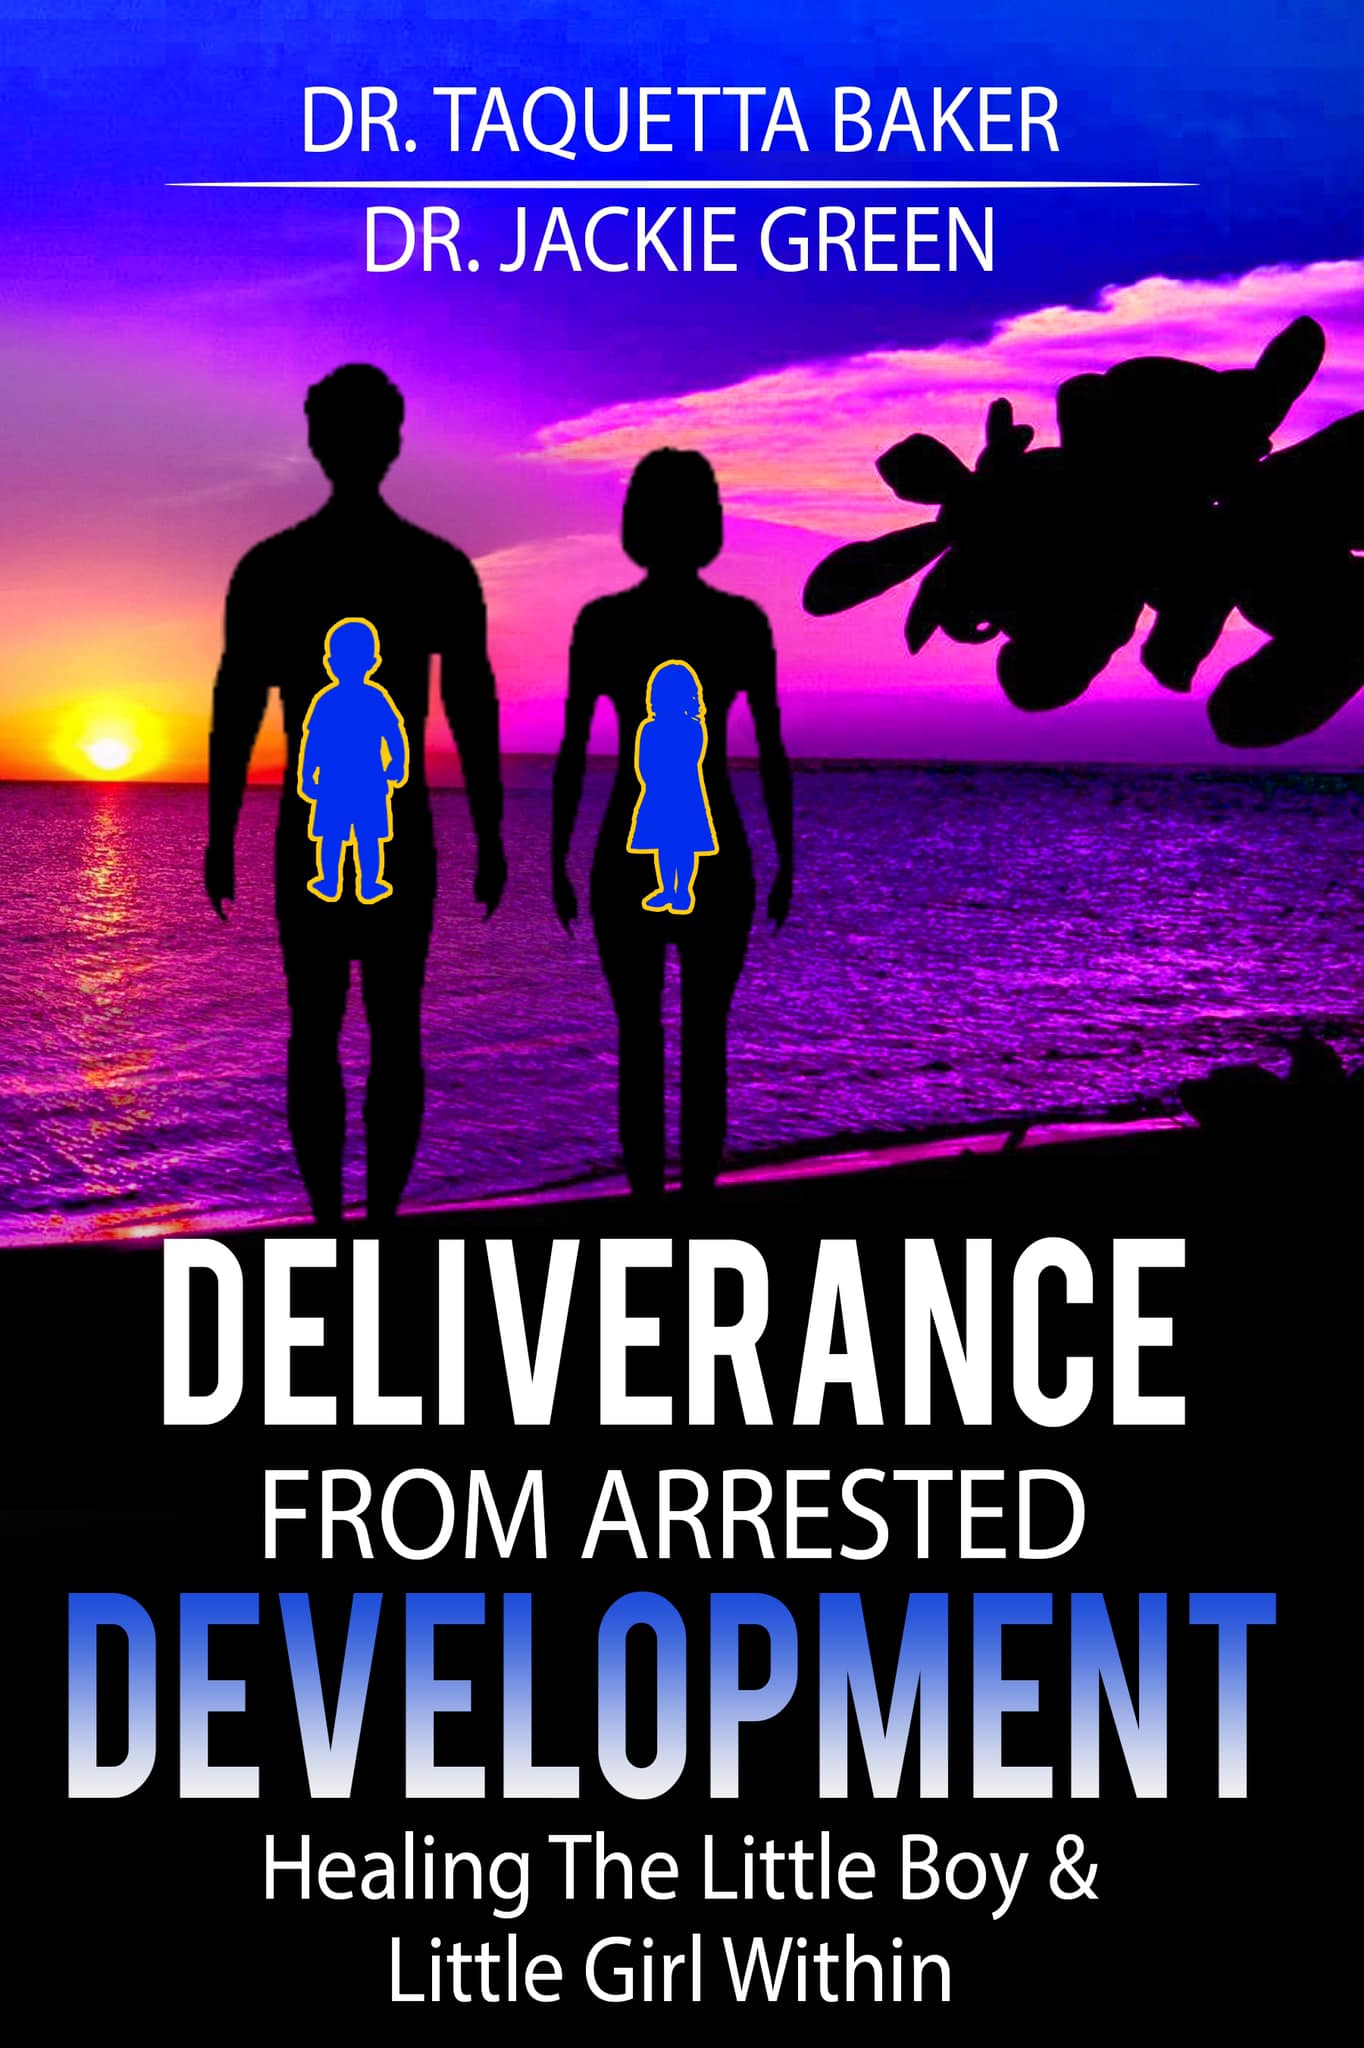 Arrested Development: Little Boy/Girl Spirit